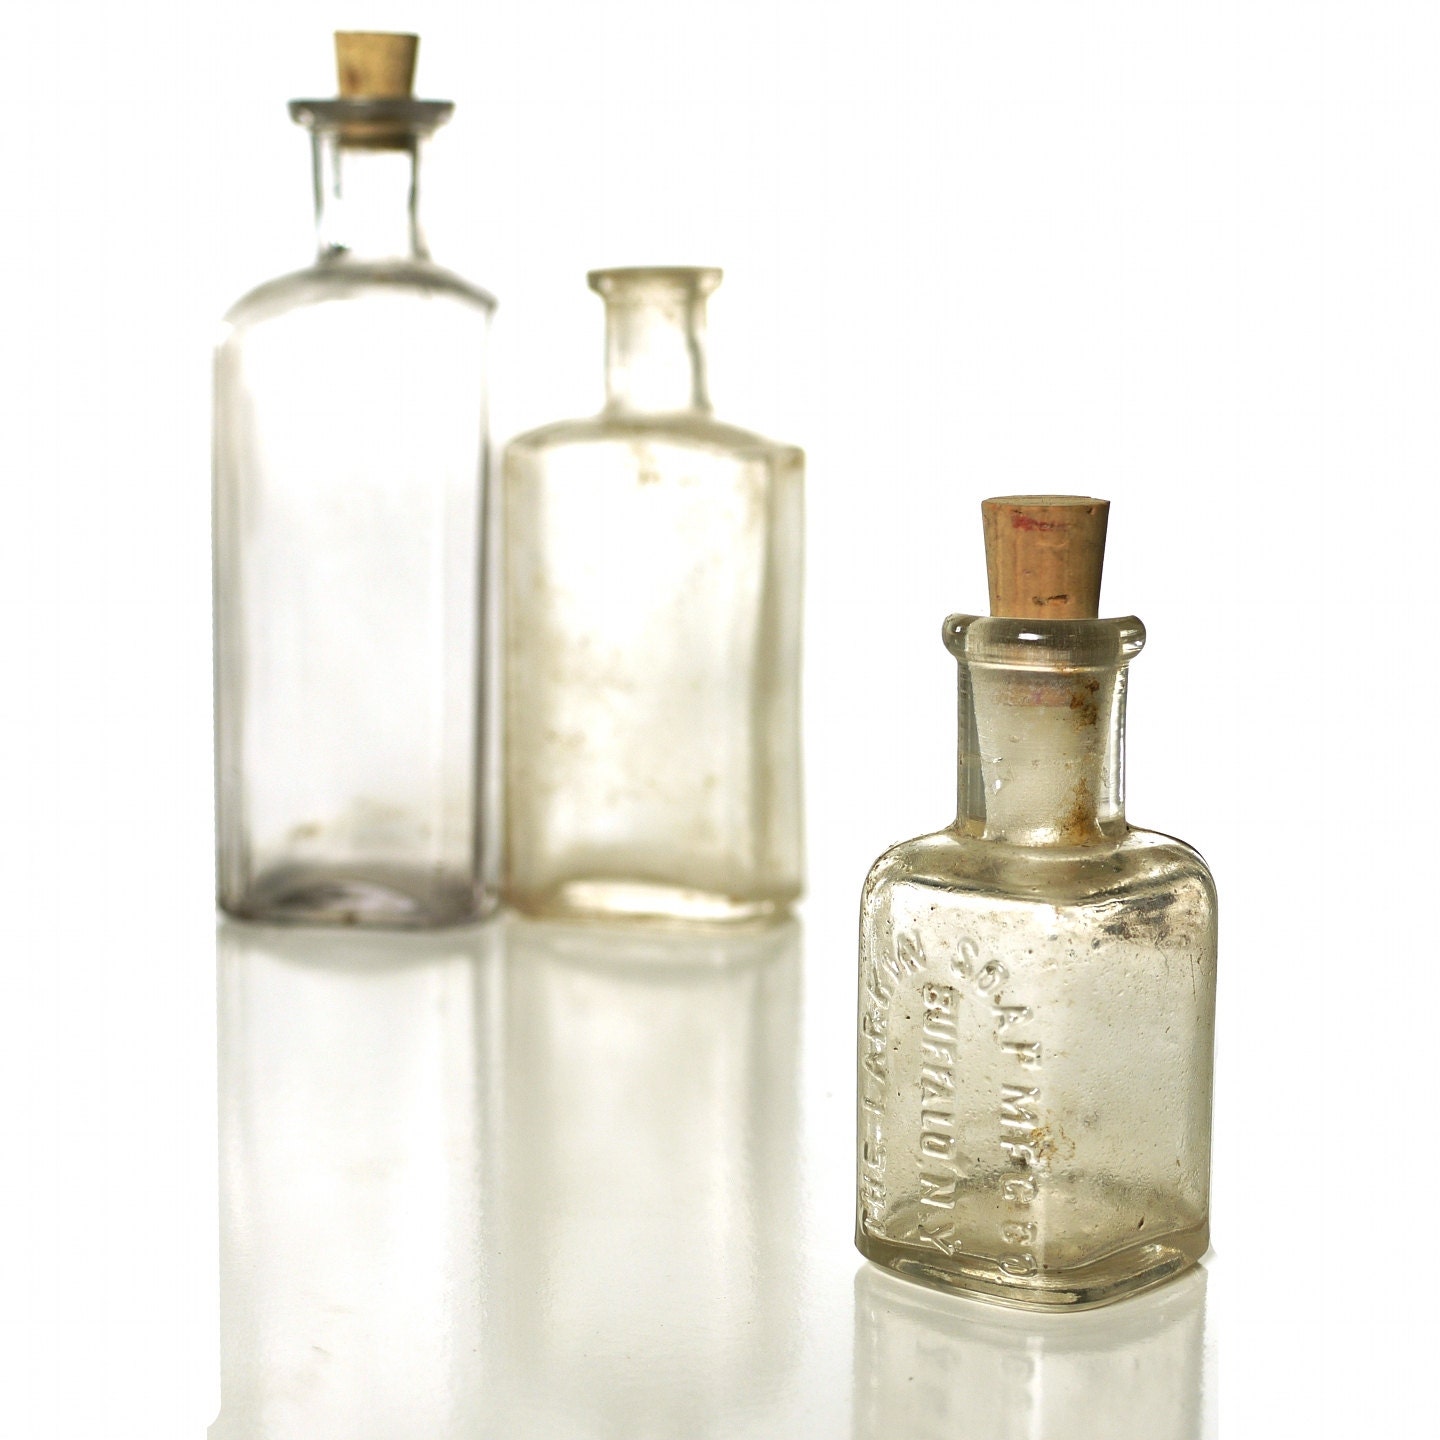 Antique Apothecary Bottles, Set of Three - DailyMemorandum